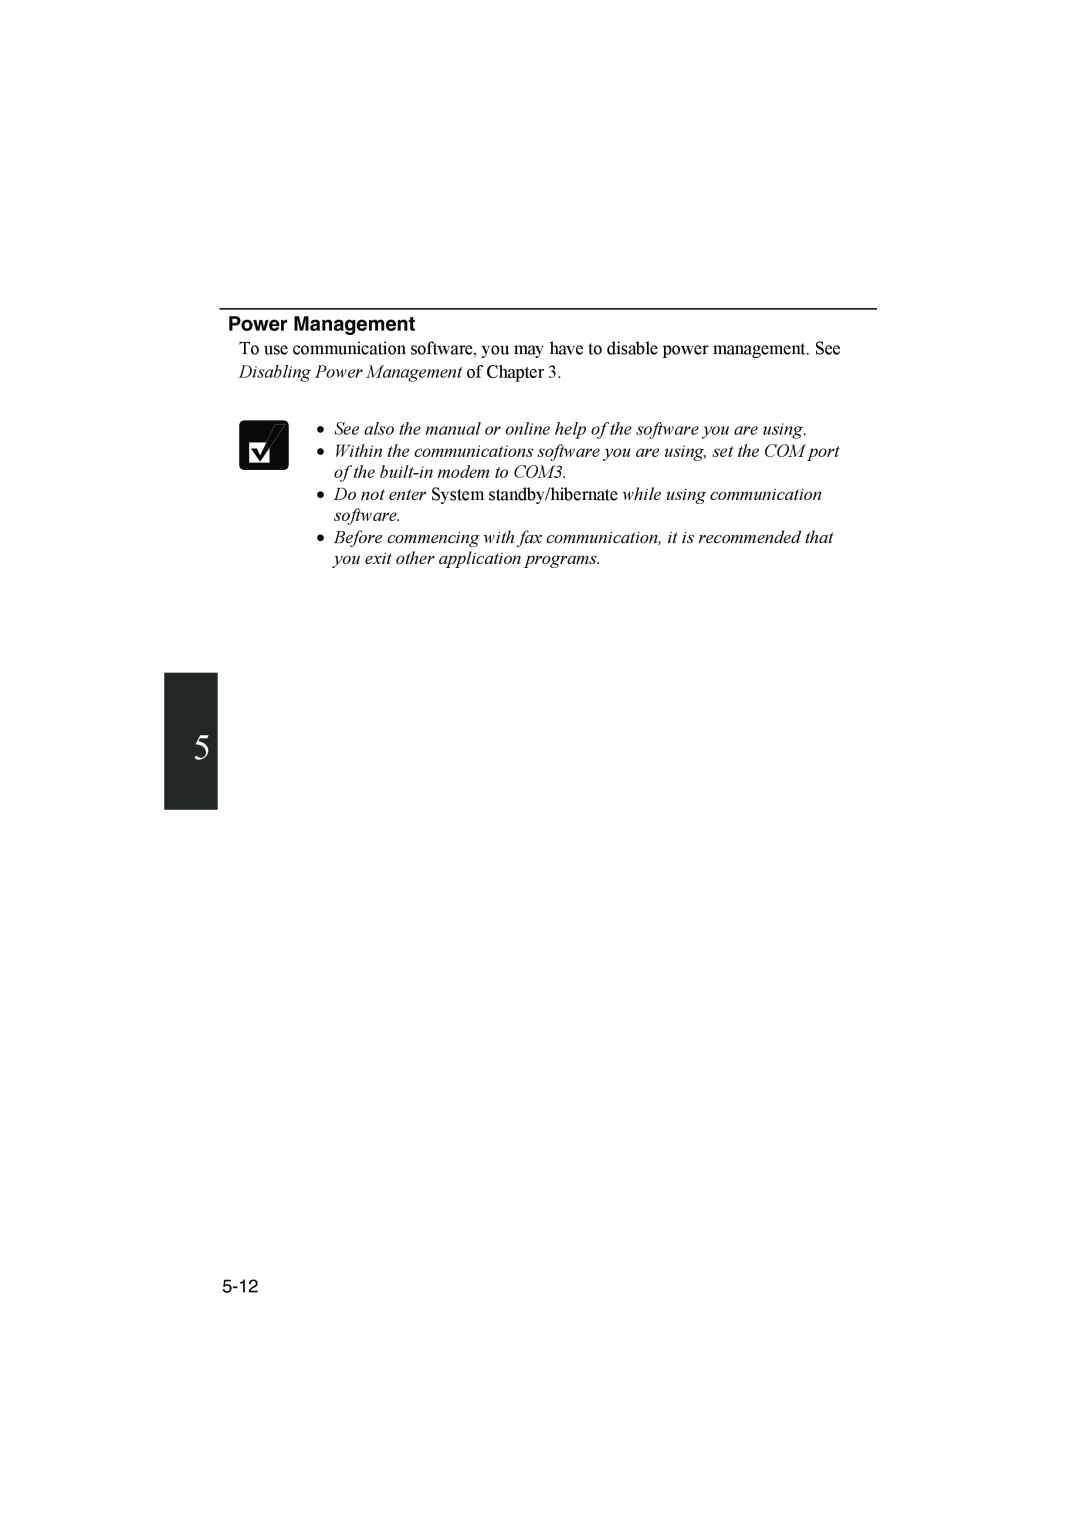 Sharp PC-MM1 manual Power Management 